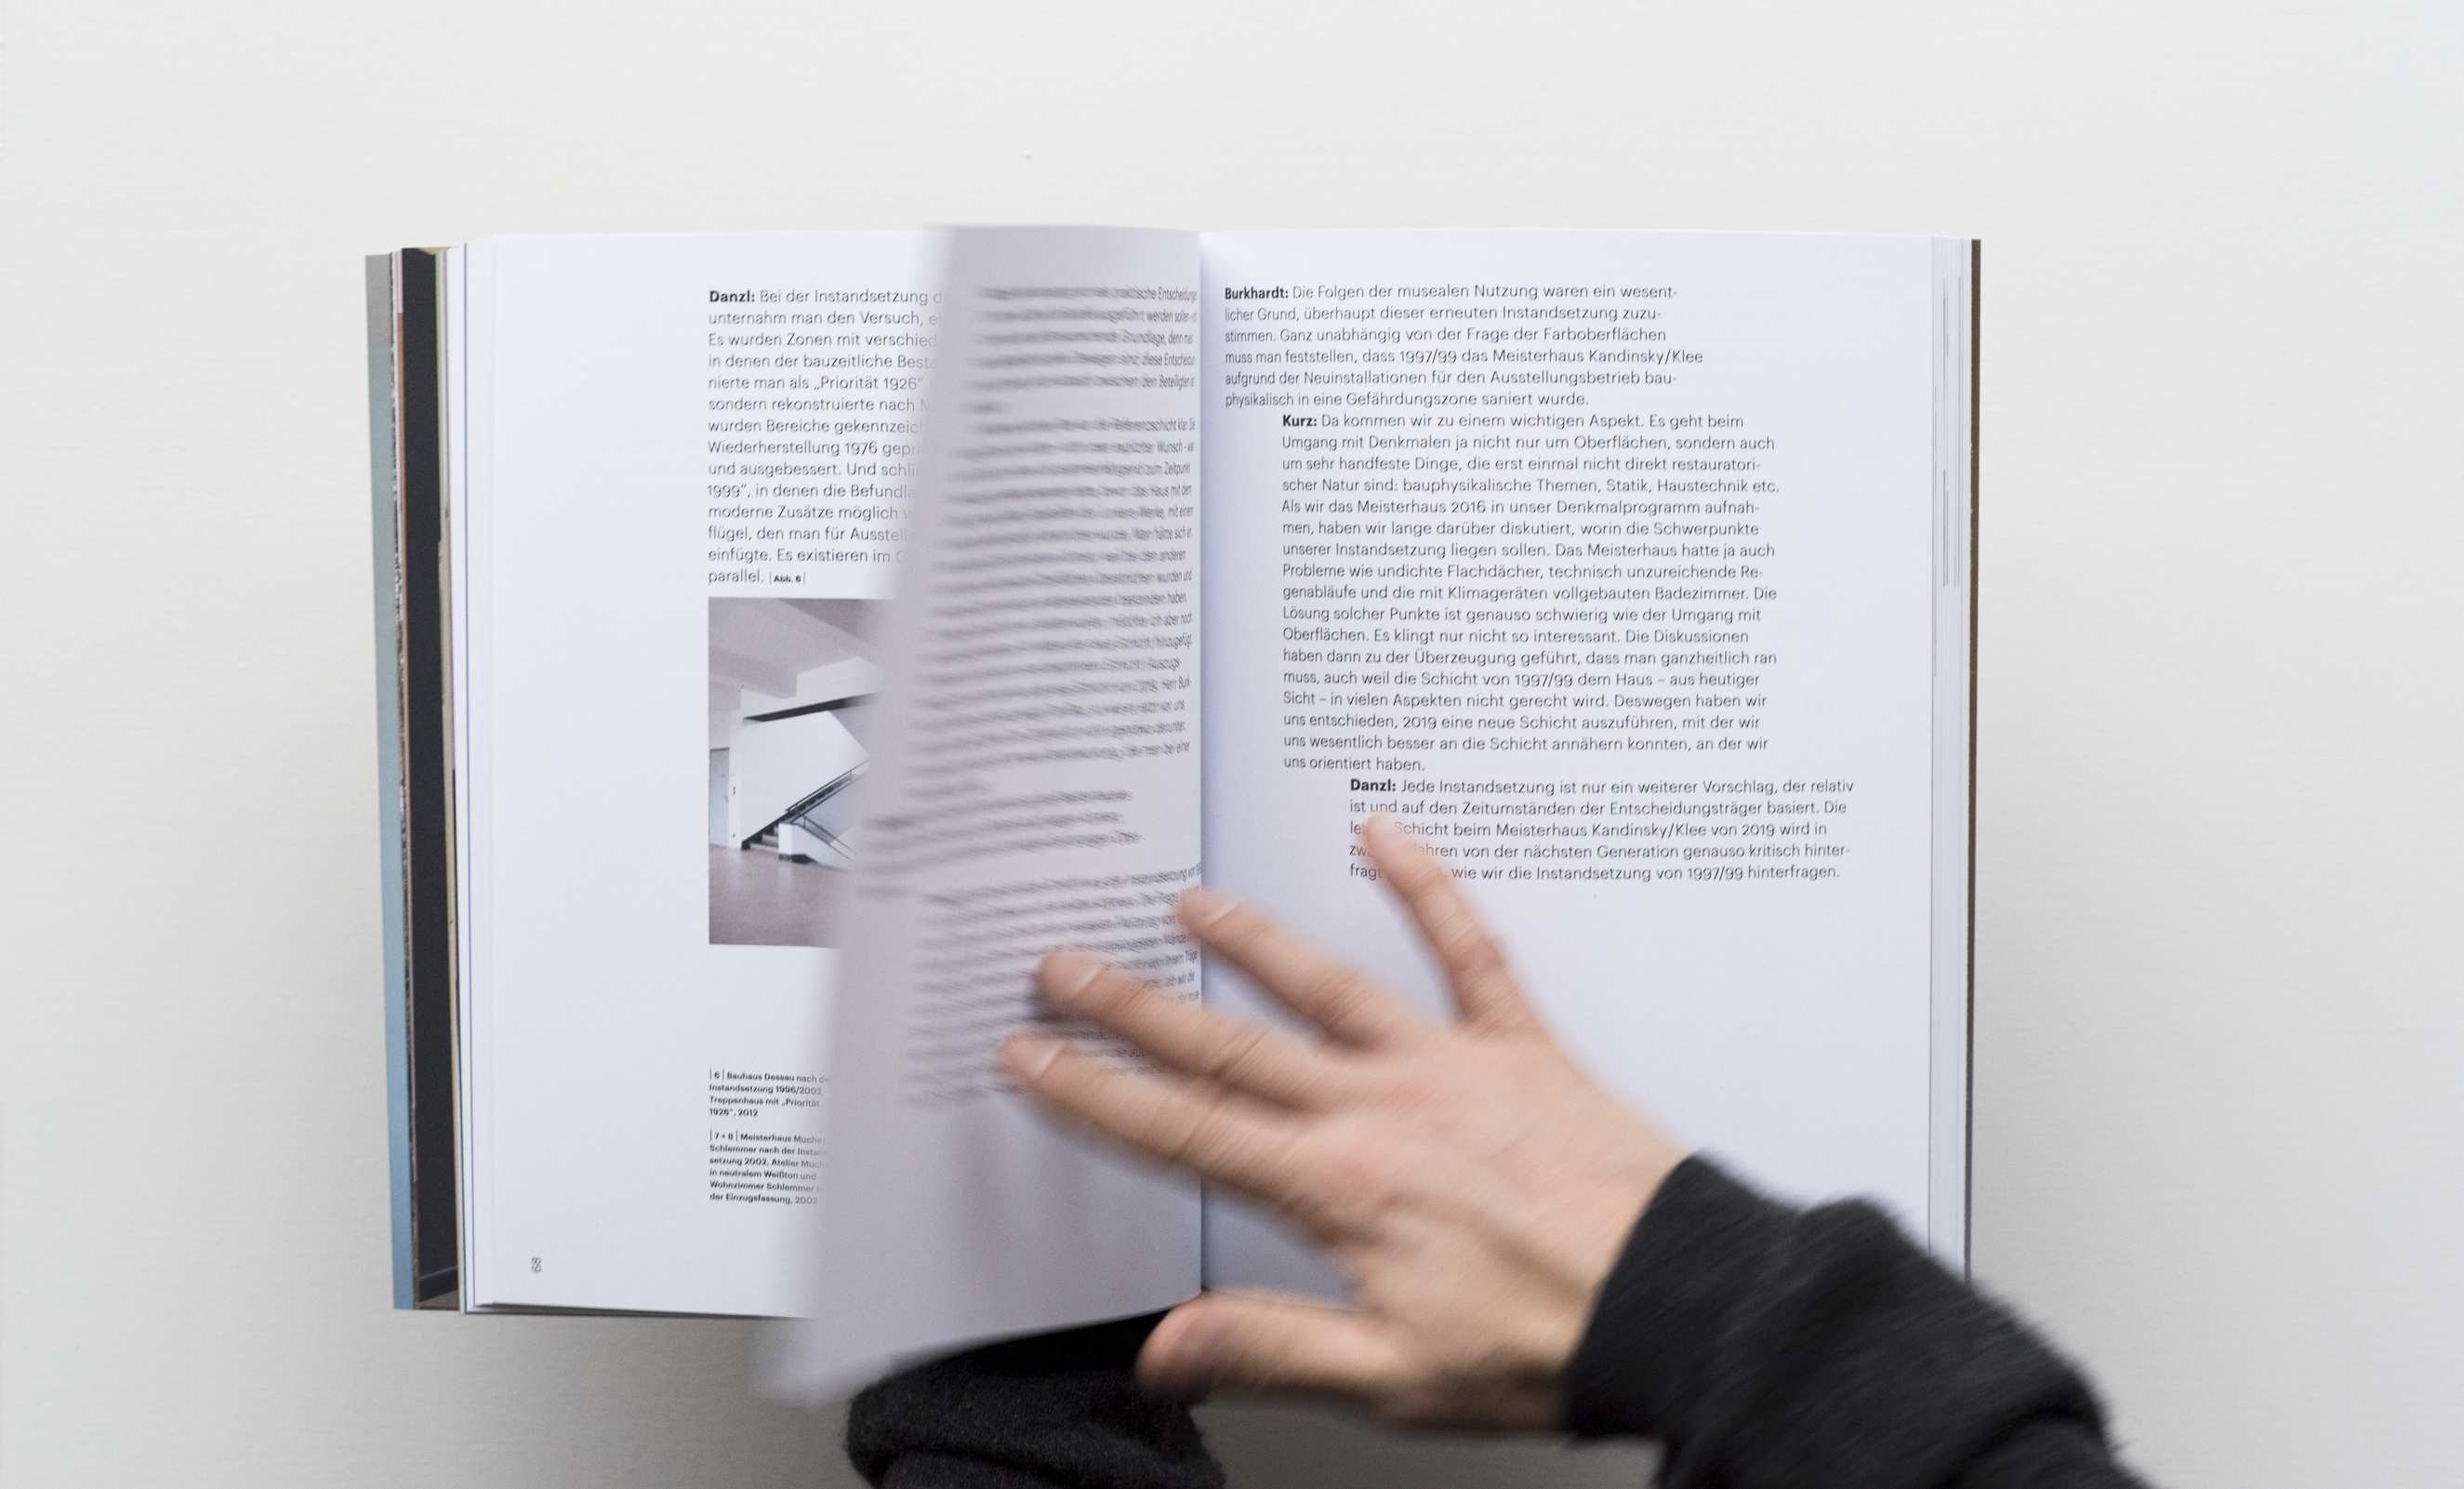 meisterhaus-kandinsky-klee-book-9-2650x1600px